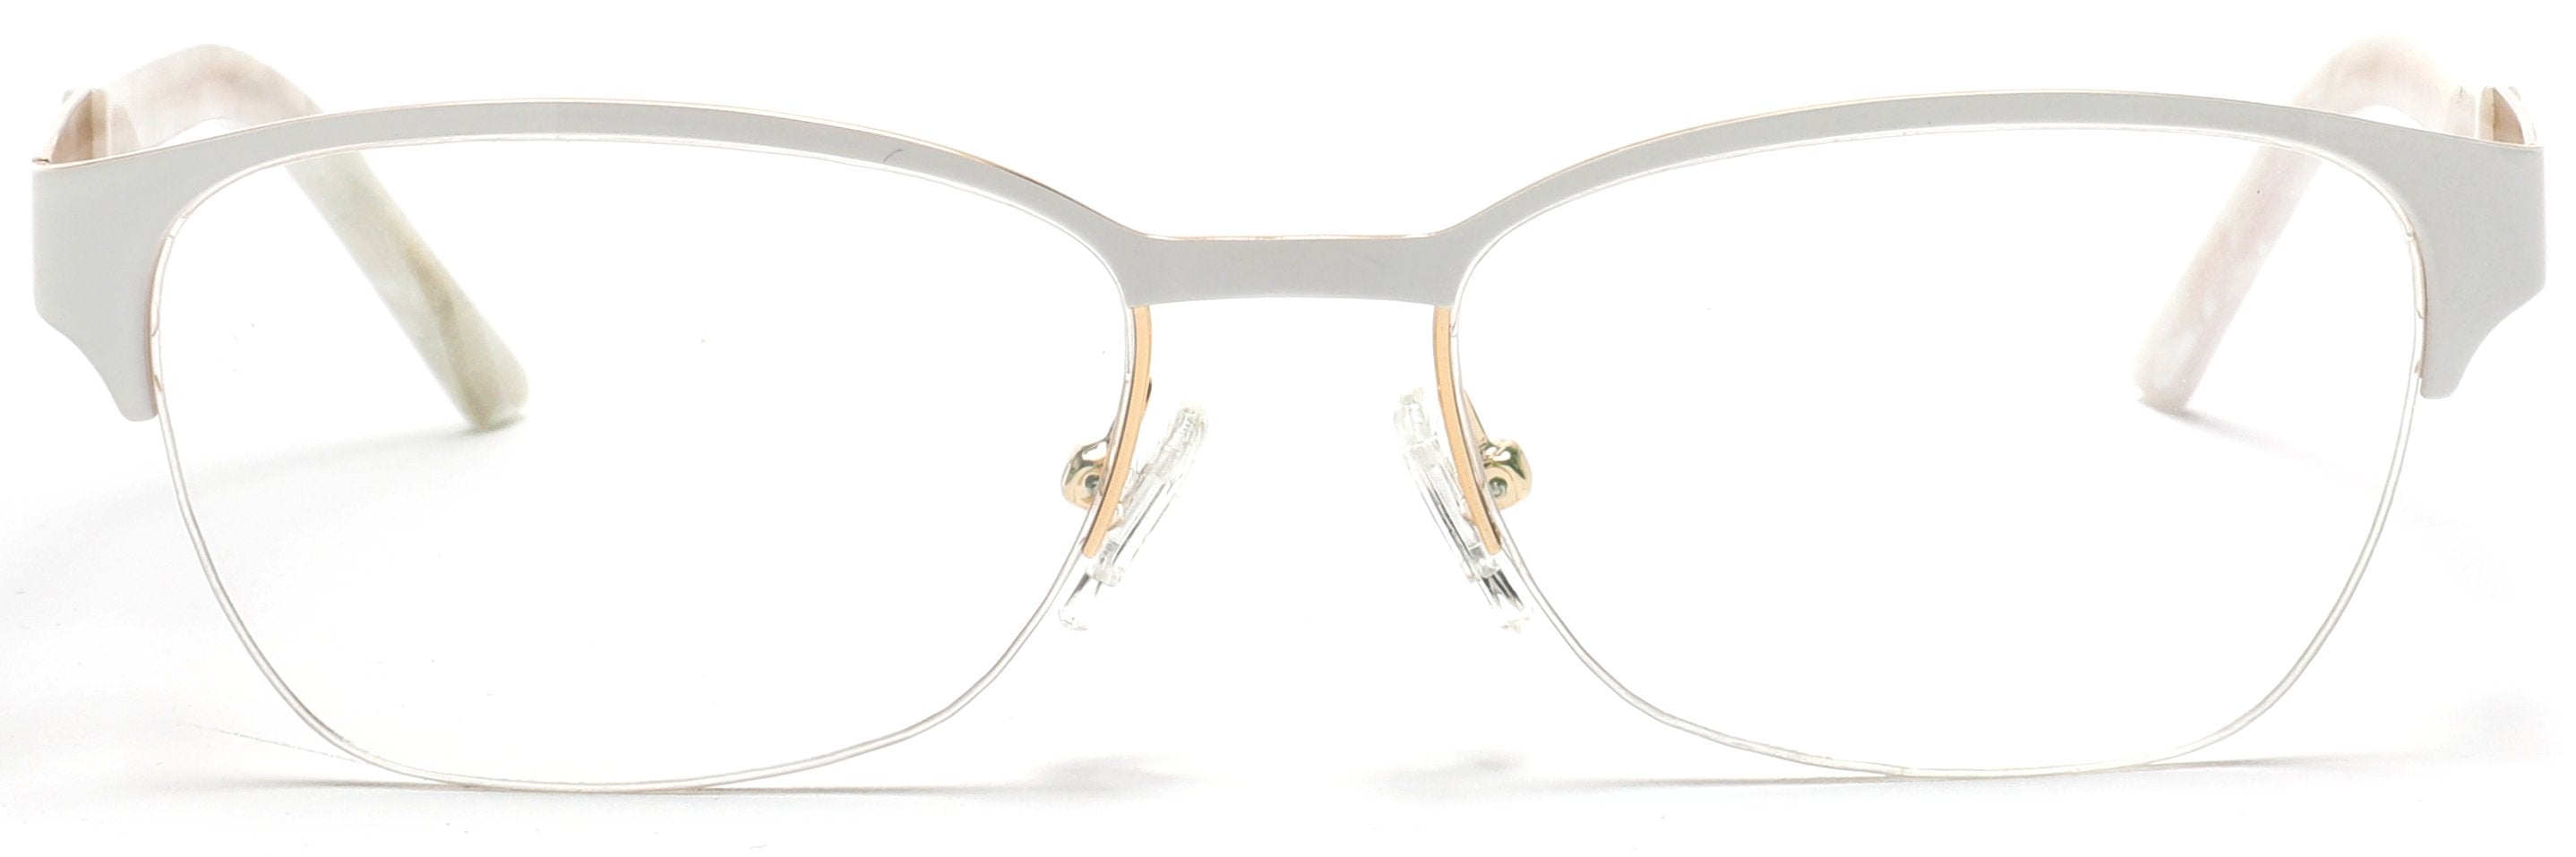 Tango Optics Metal Optical Eyeglasses Frame Luxe Stainless Steel Jackie O Black Gold For Prescription Lens-Samba Shades